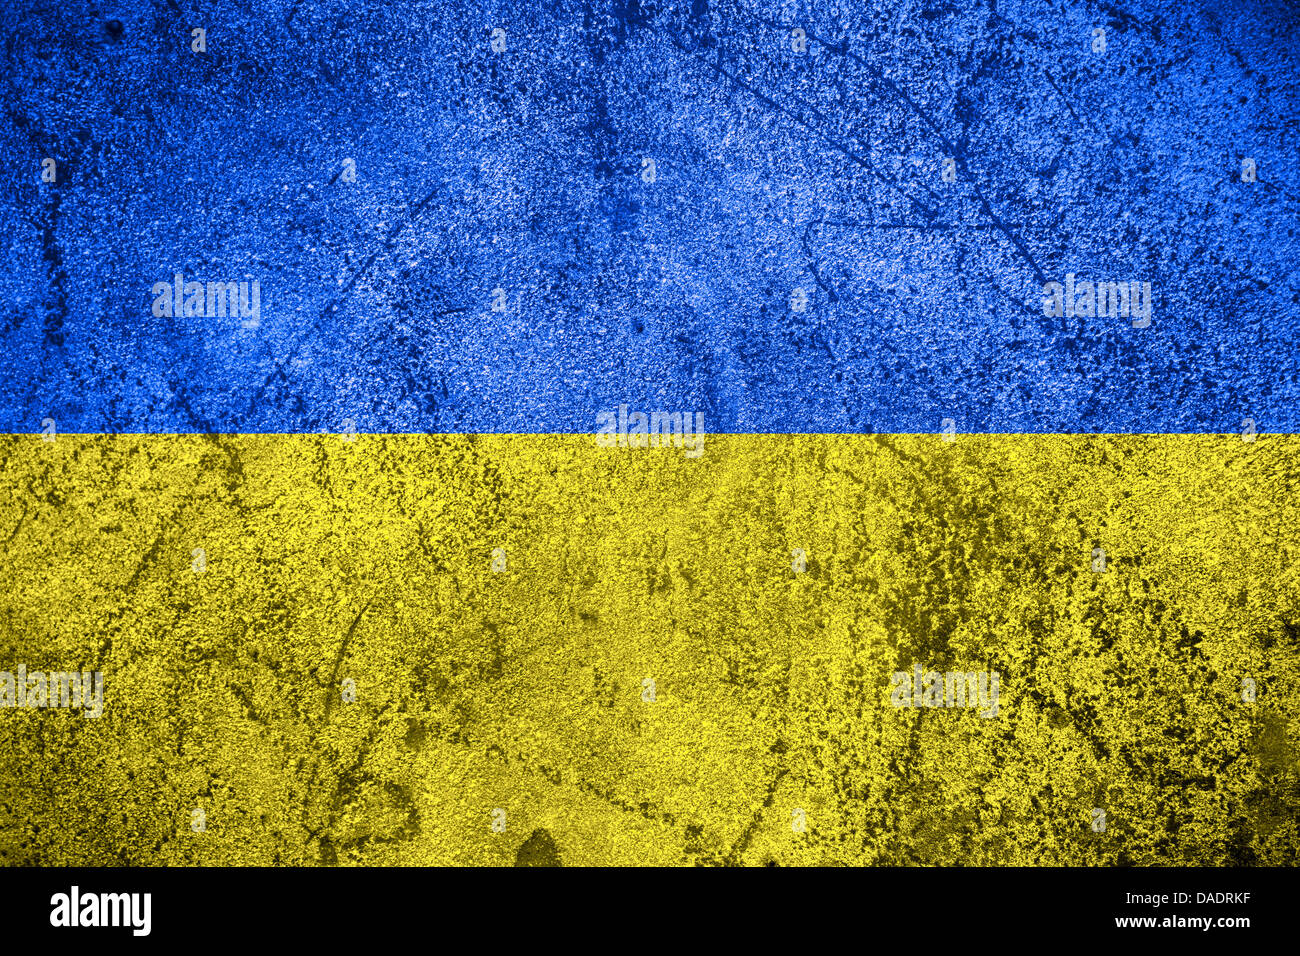 https://c8.alamy.com/compit/dadrkf/bandiera-dell-ucraina-o-ucraino-banner-su-ruvida-sfondo-in-metallo-dadrkf.jpg